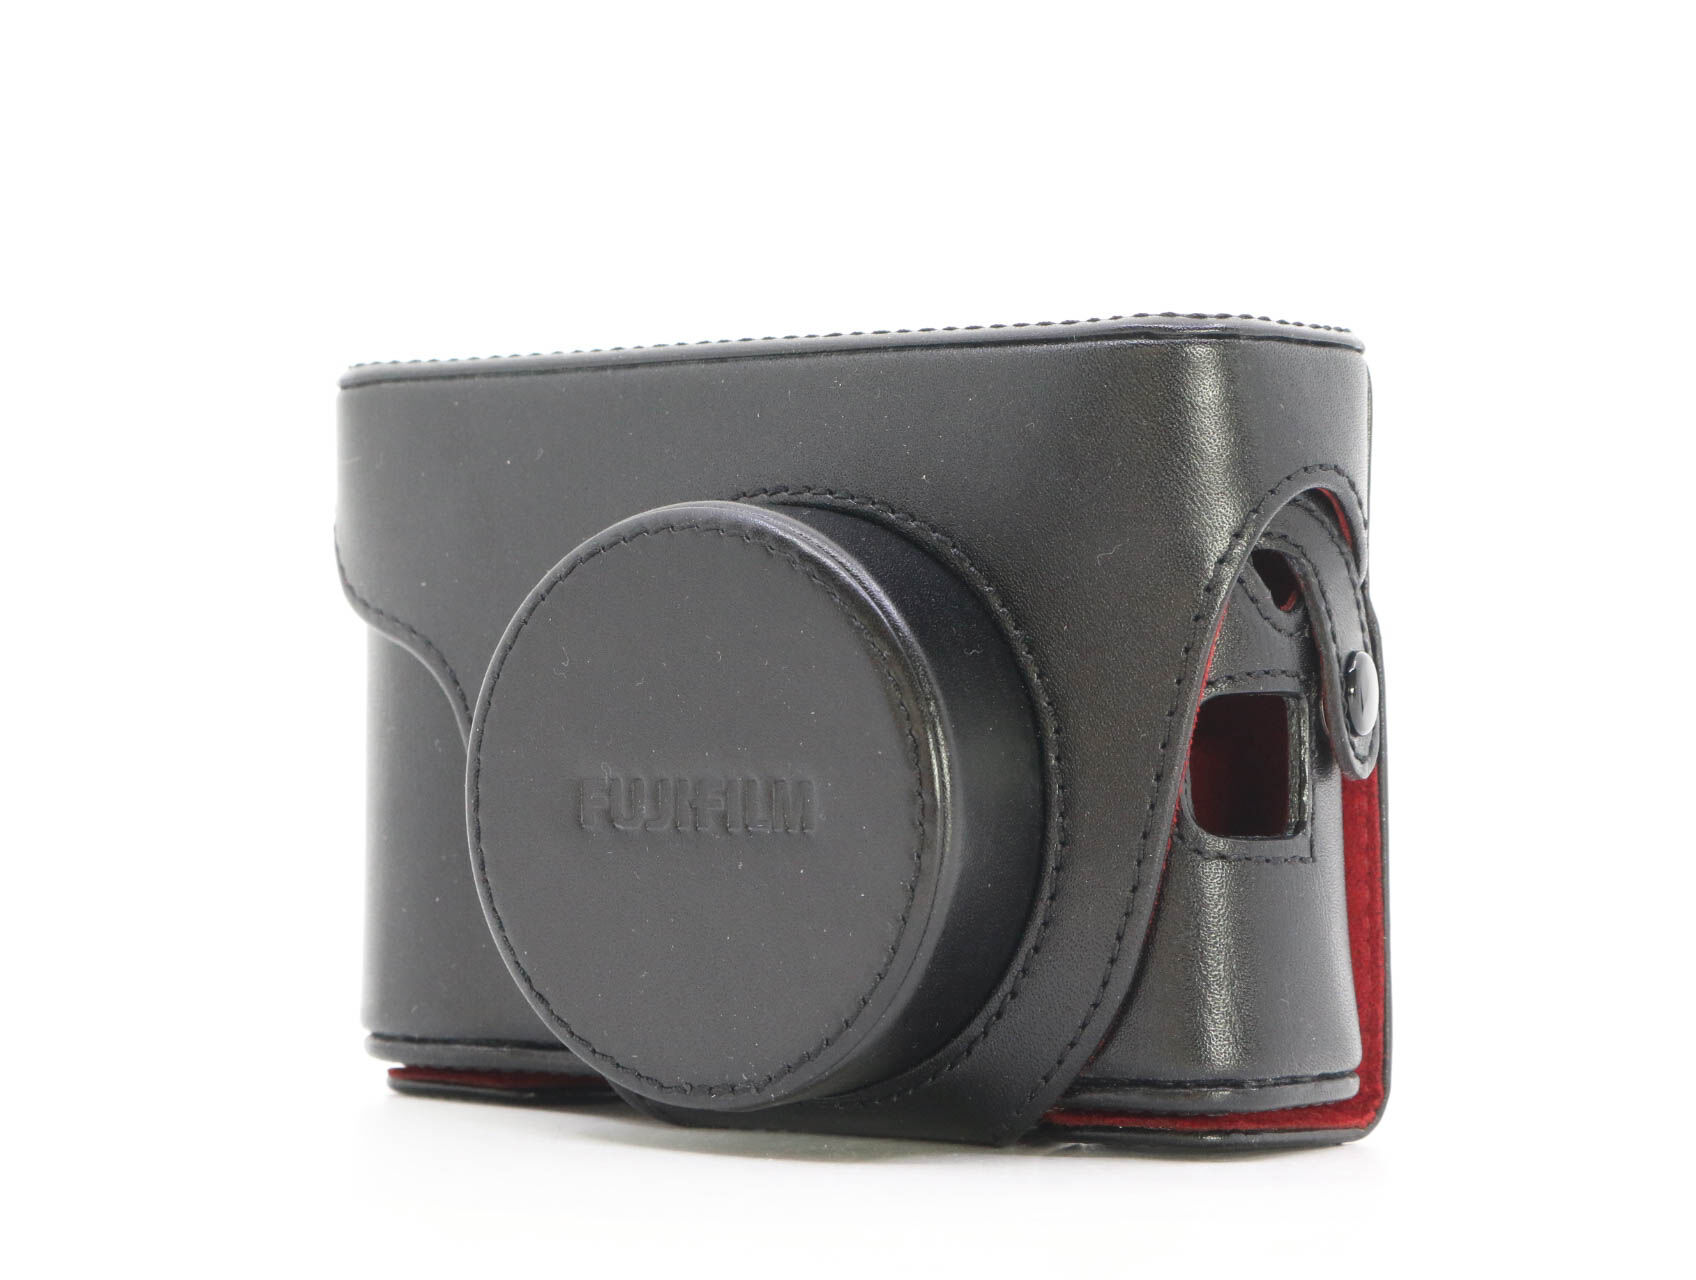 fujifilm x100 leather case (condition: like new)